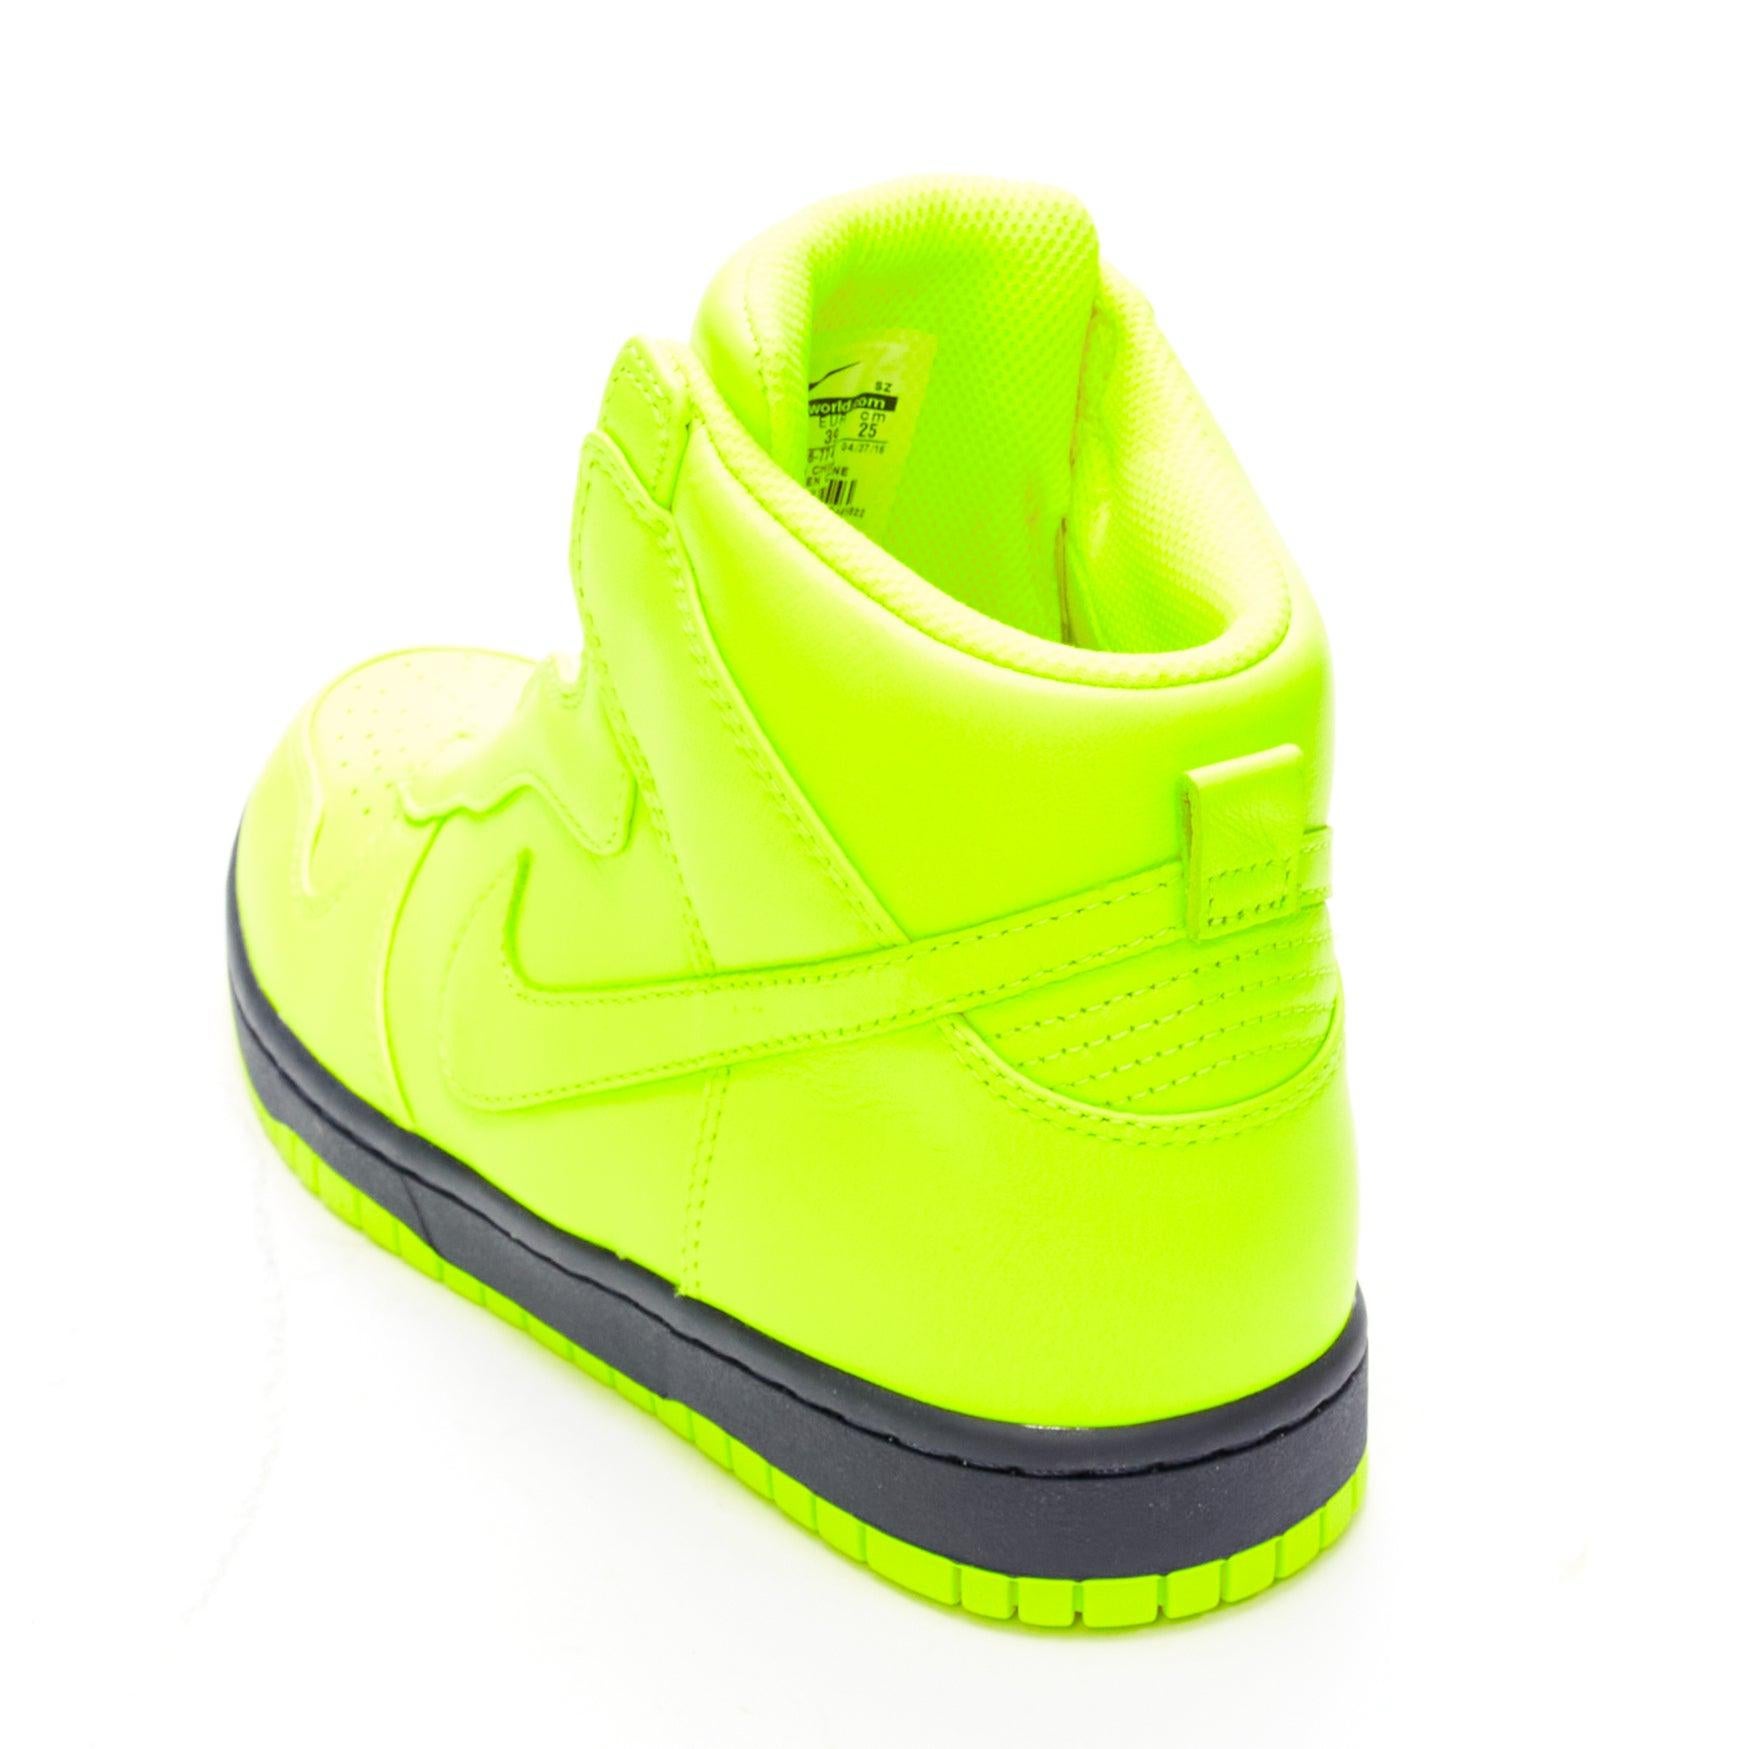 SACAI NIKE NIKELAB Dunk Lux SP Volt neon yellow high top sneakers US8 EU38 3